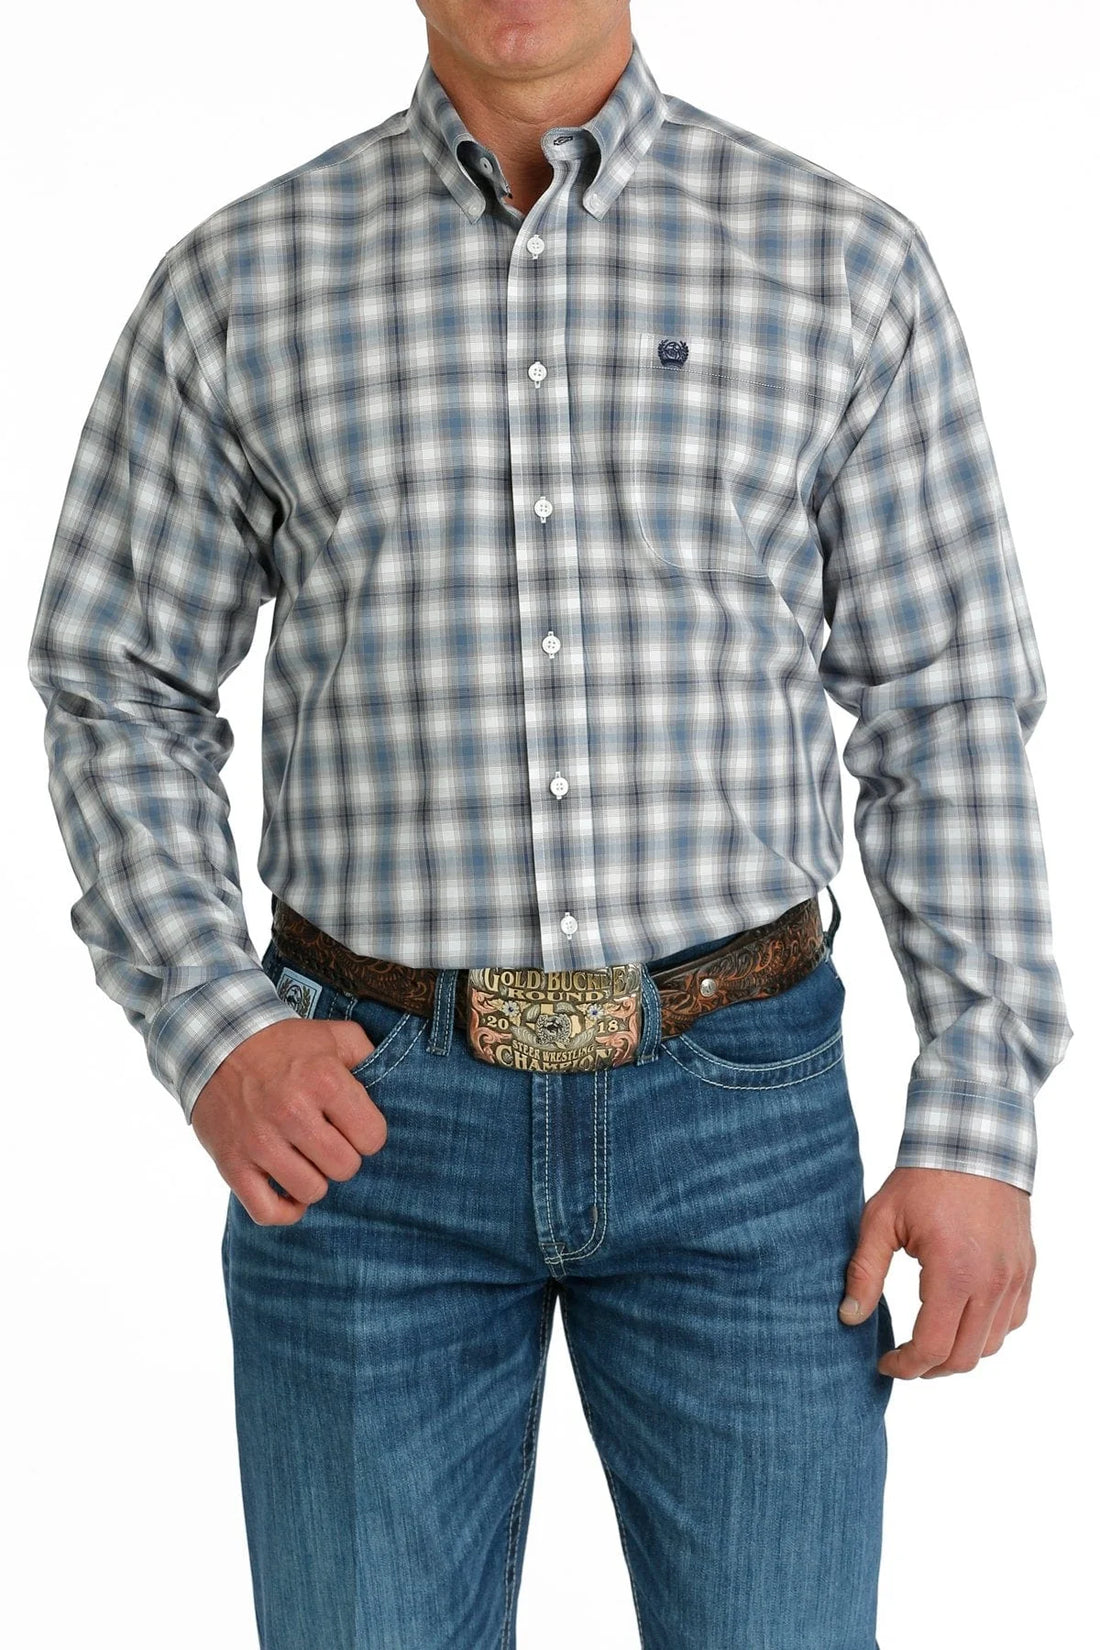 Cinch - Men's Plaid Long Sleeve Western Shirt | Mtw1105697